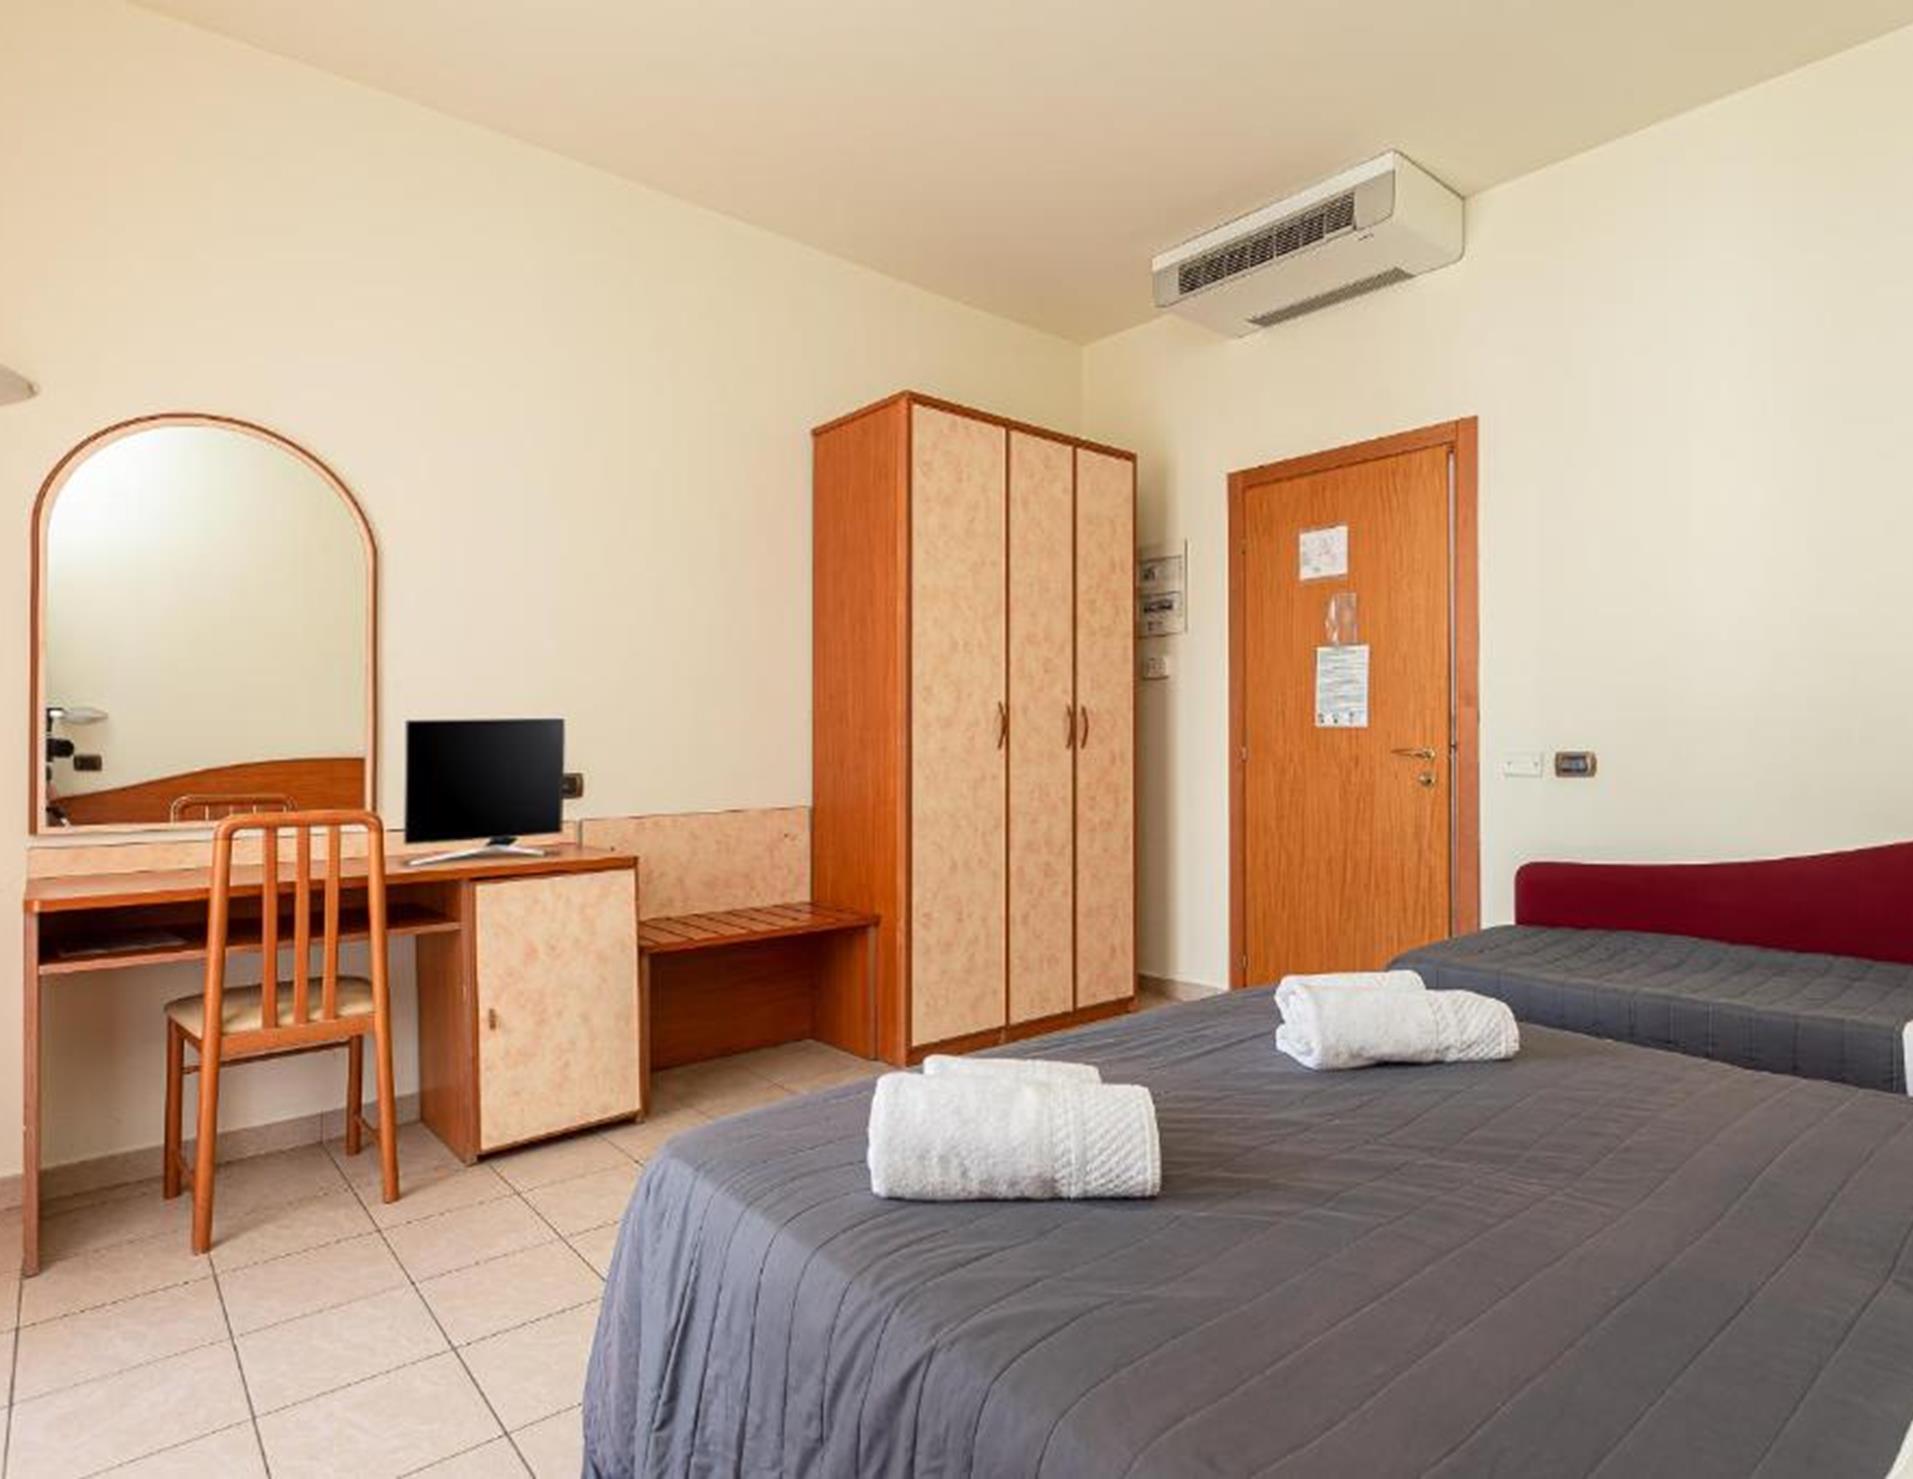 Hotel Villa Maria - Room 3